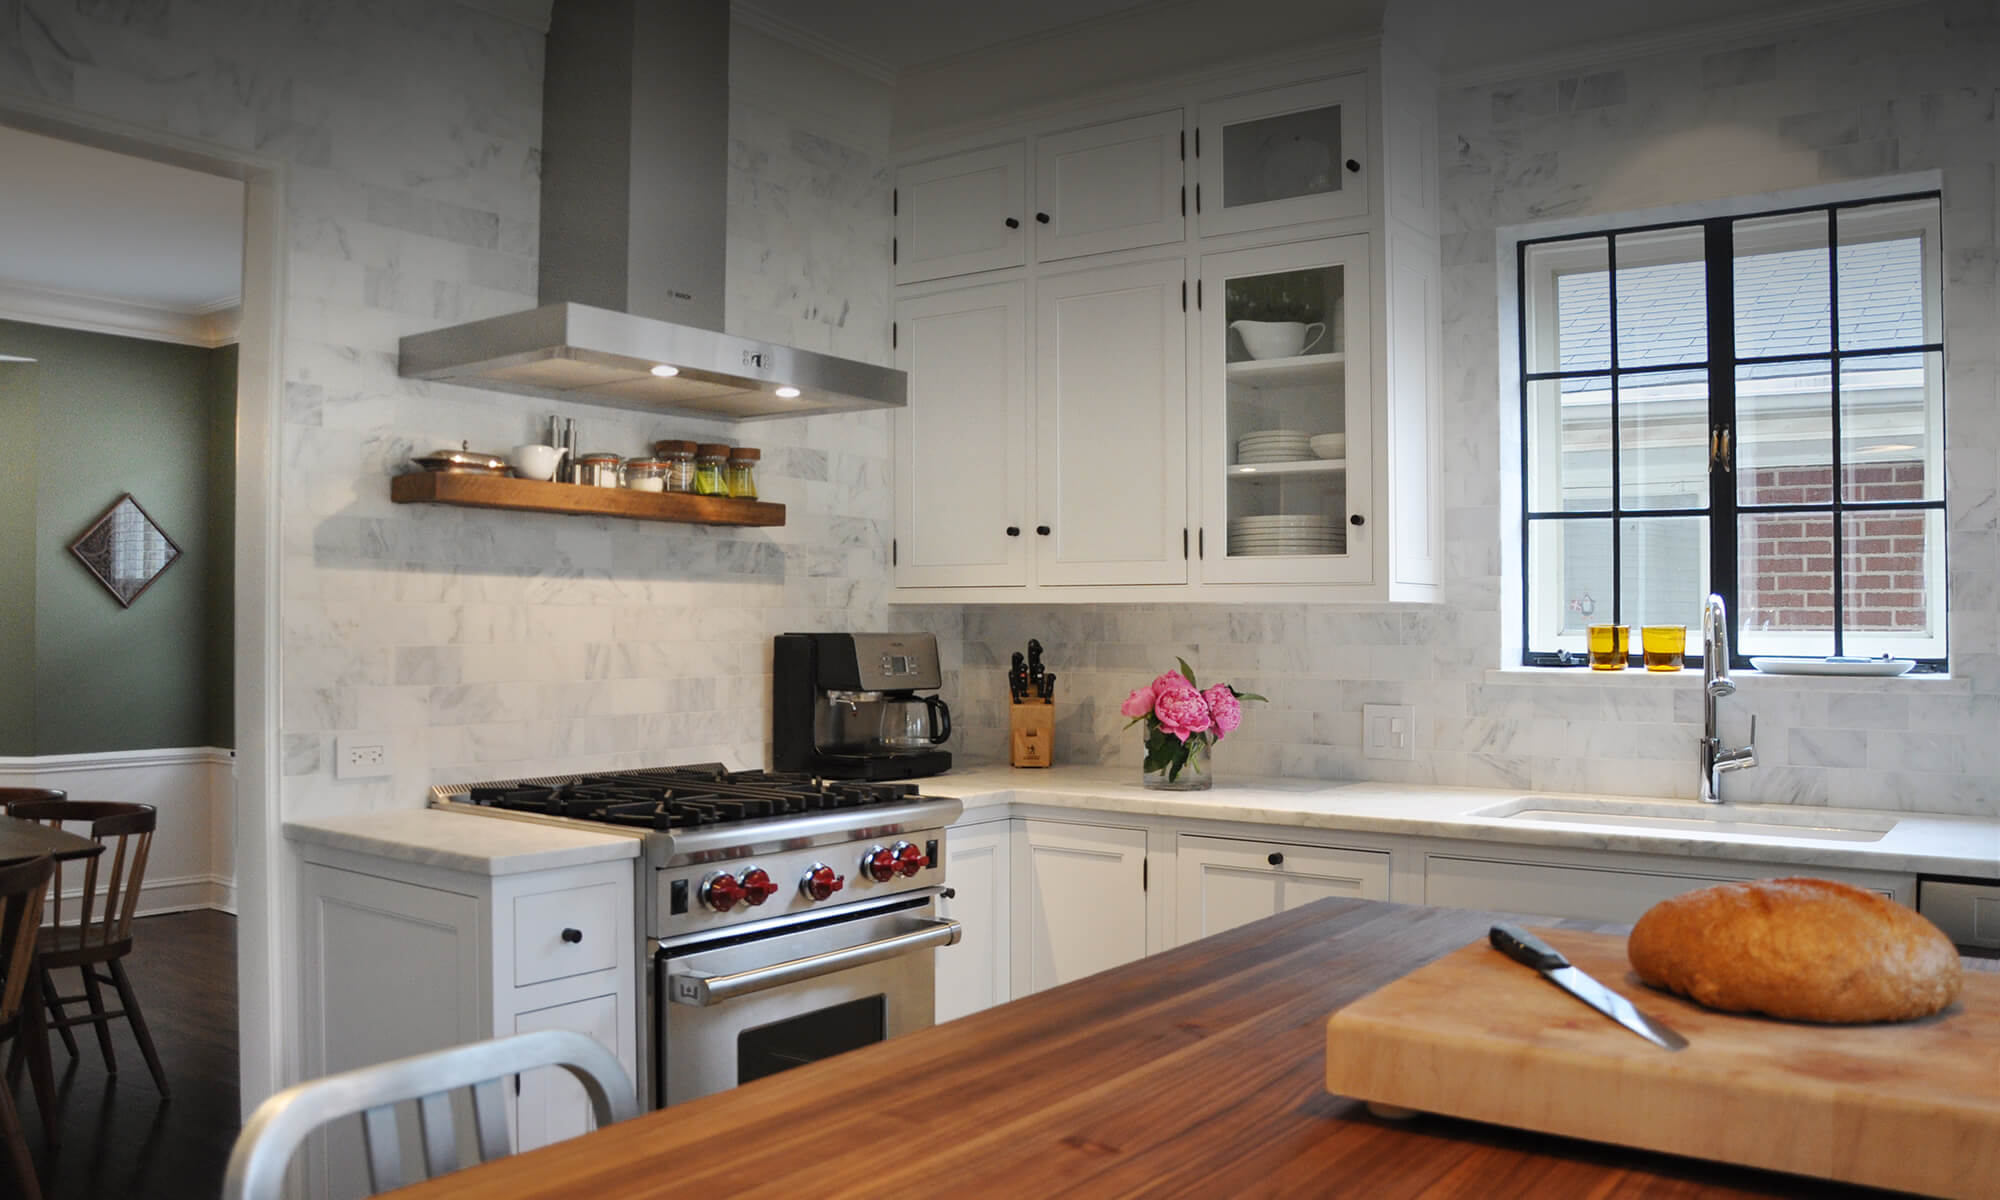 Artistic Construction modern white cabinet kitchen with butcher block island